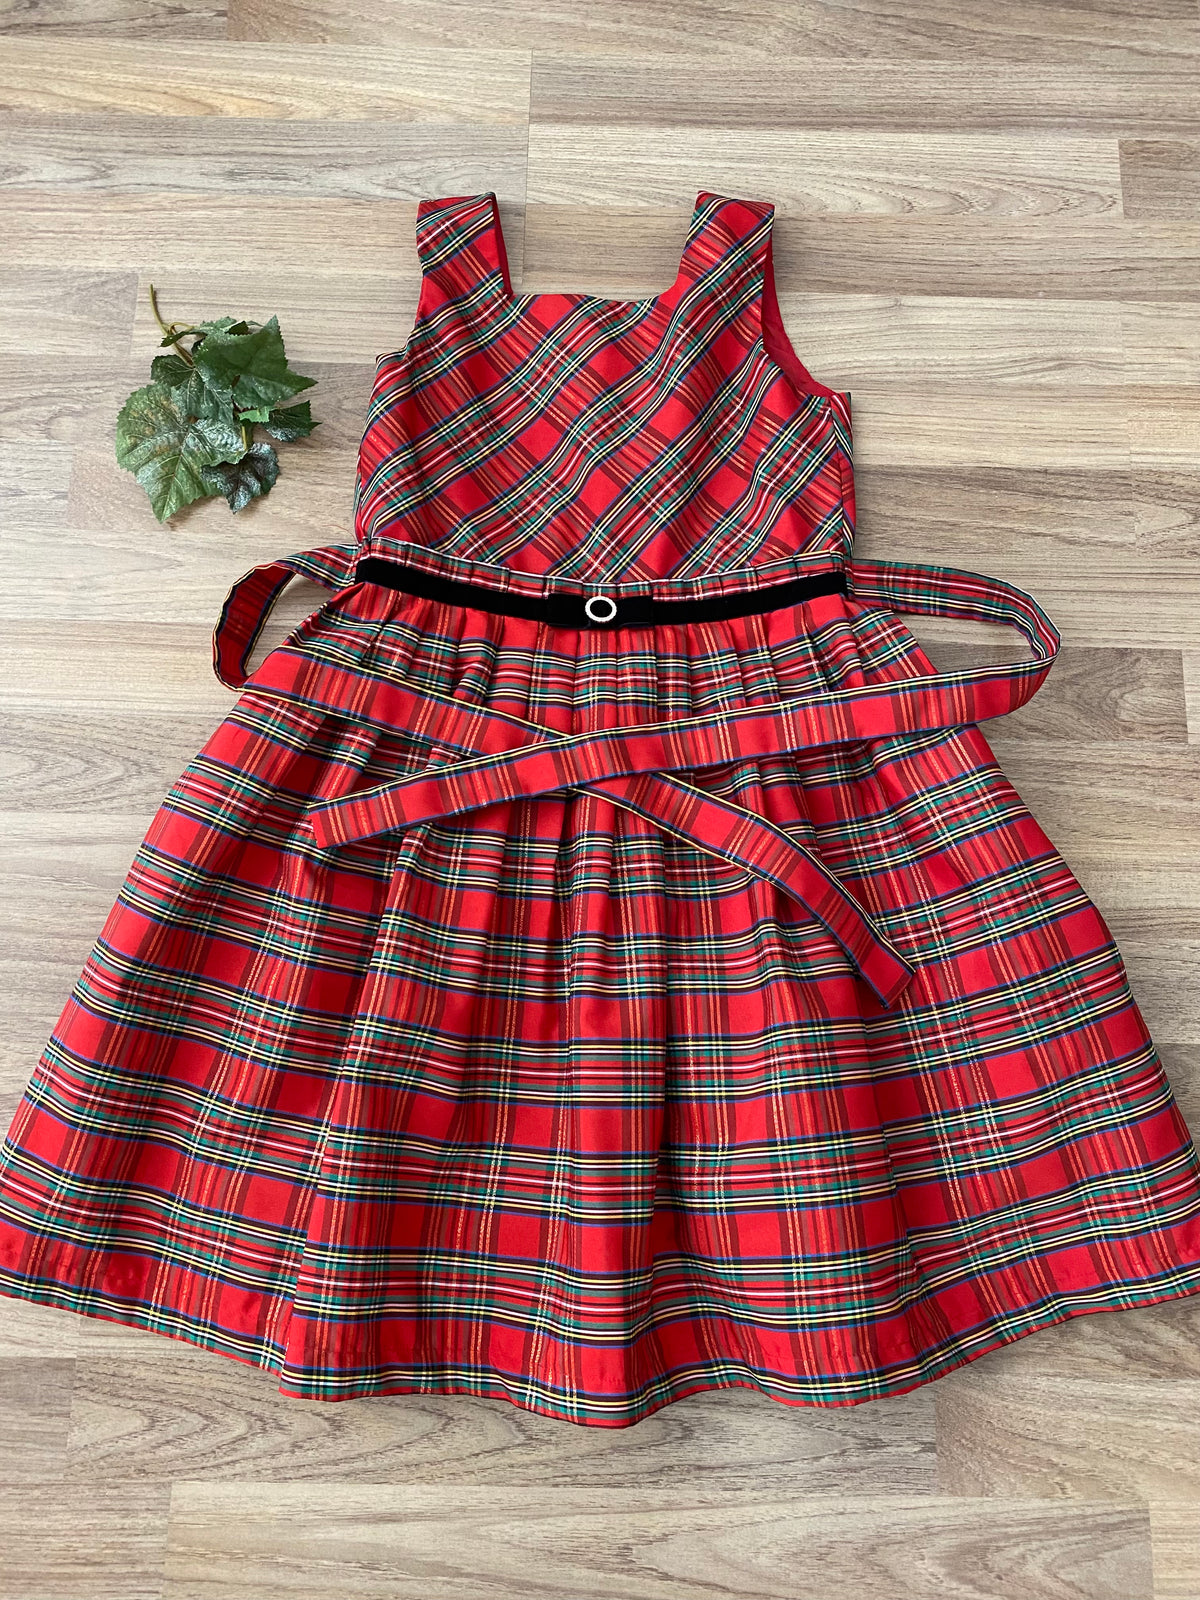 Dress (Girls Size 8)